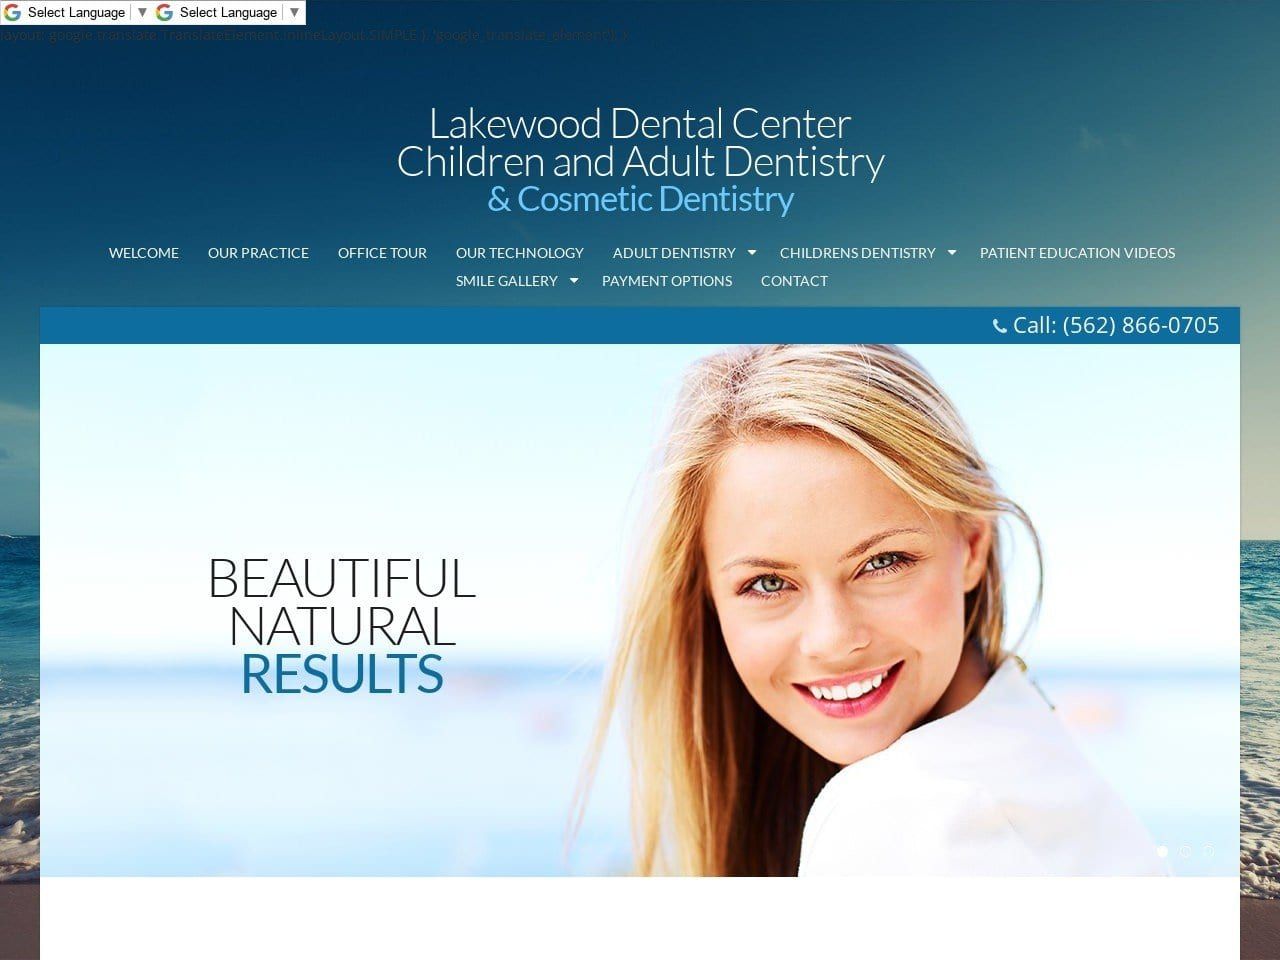 Lakewood Dental Center Sujan B C DDS Website Screenshot from lakewooddentalcenter.com